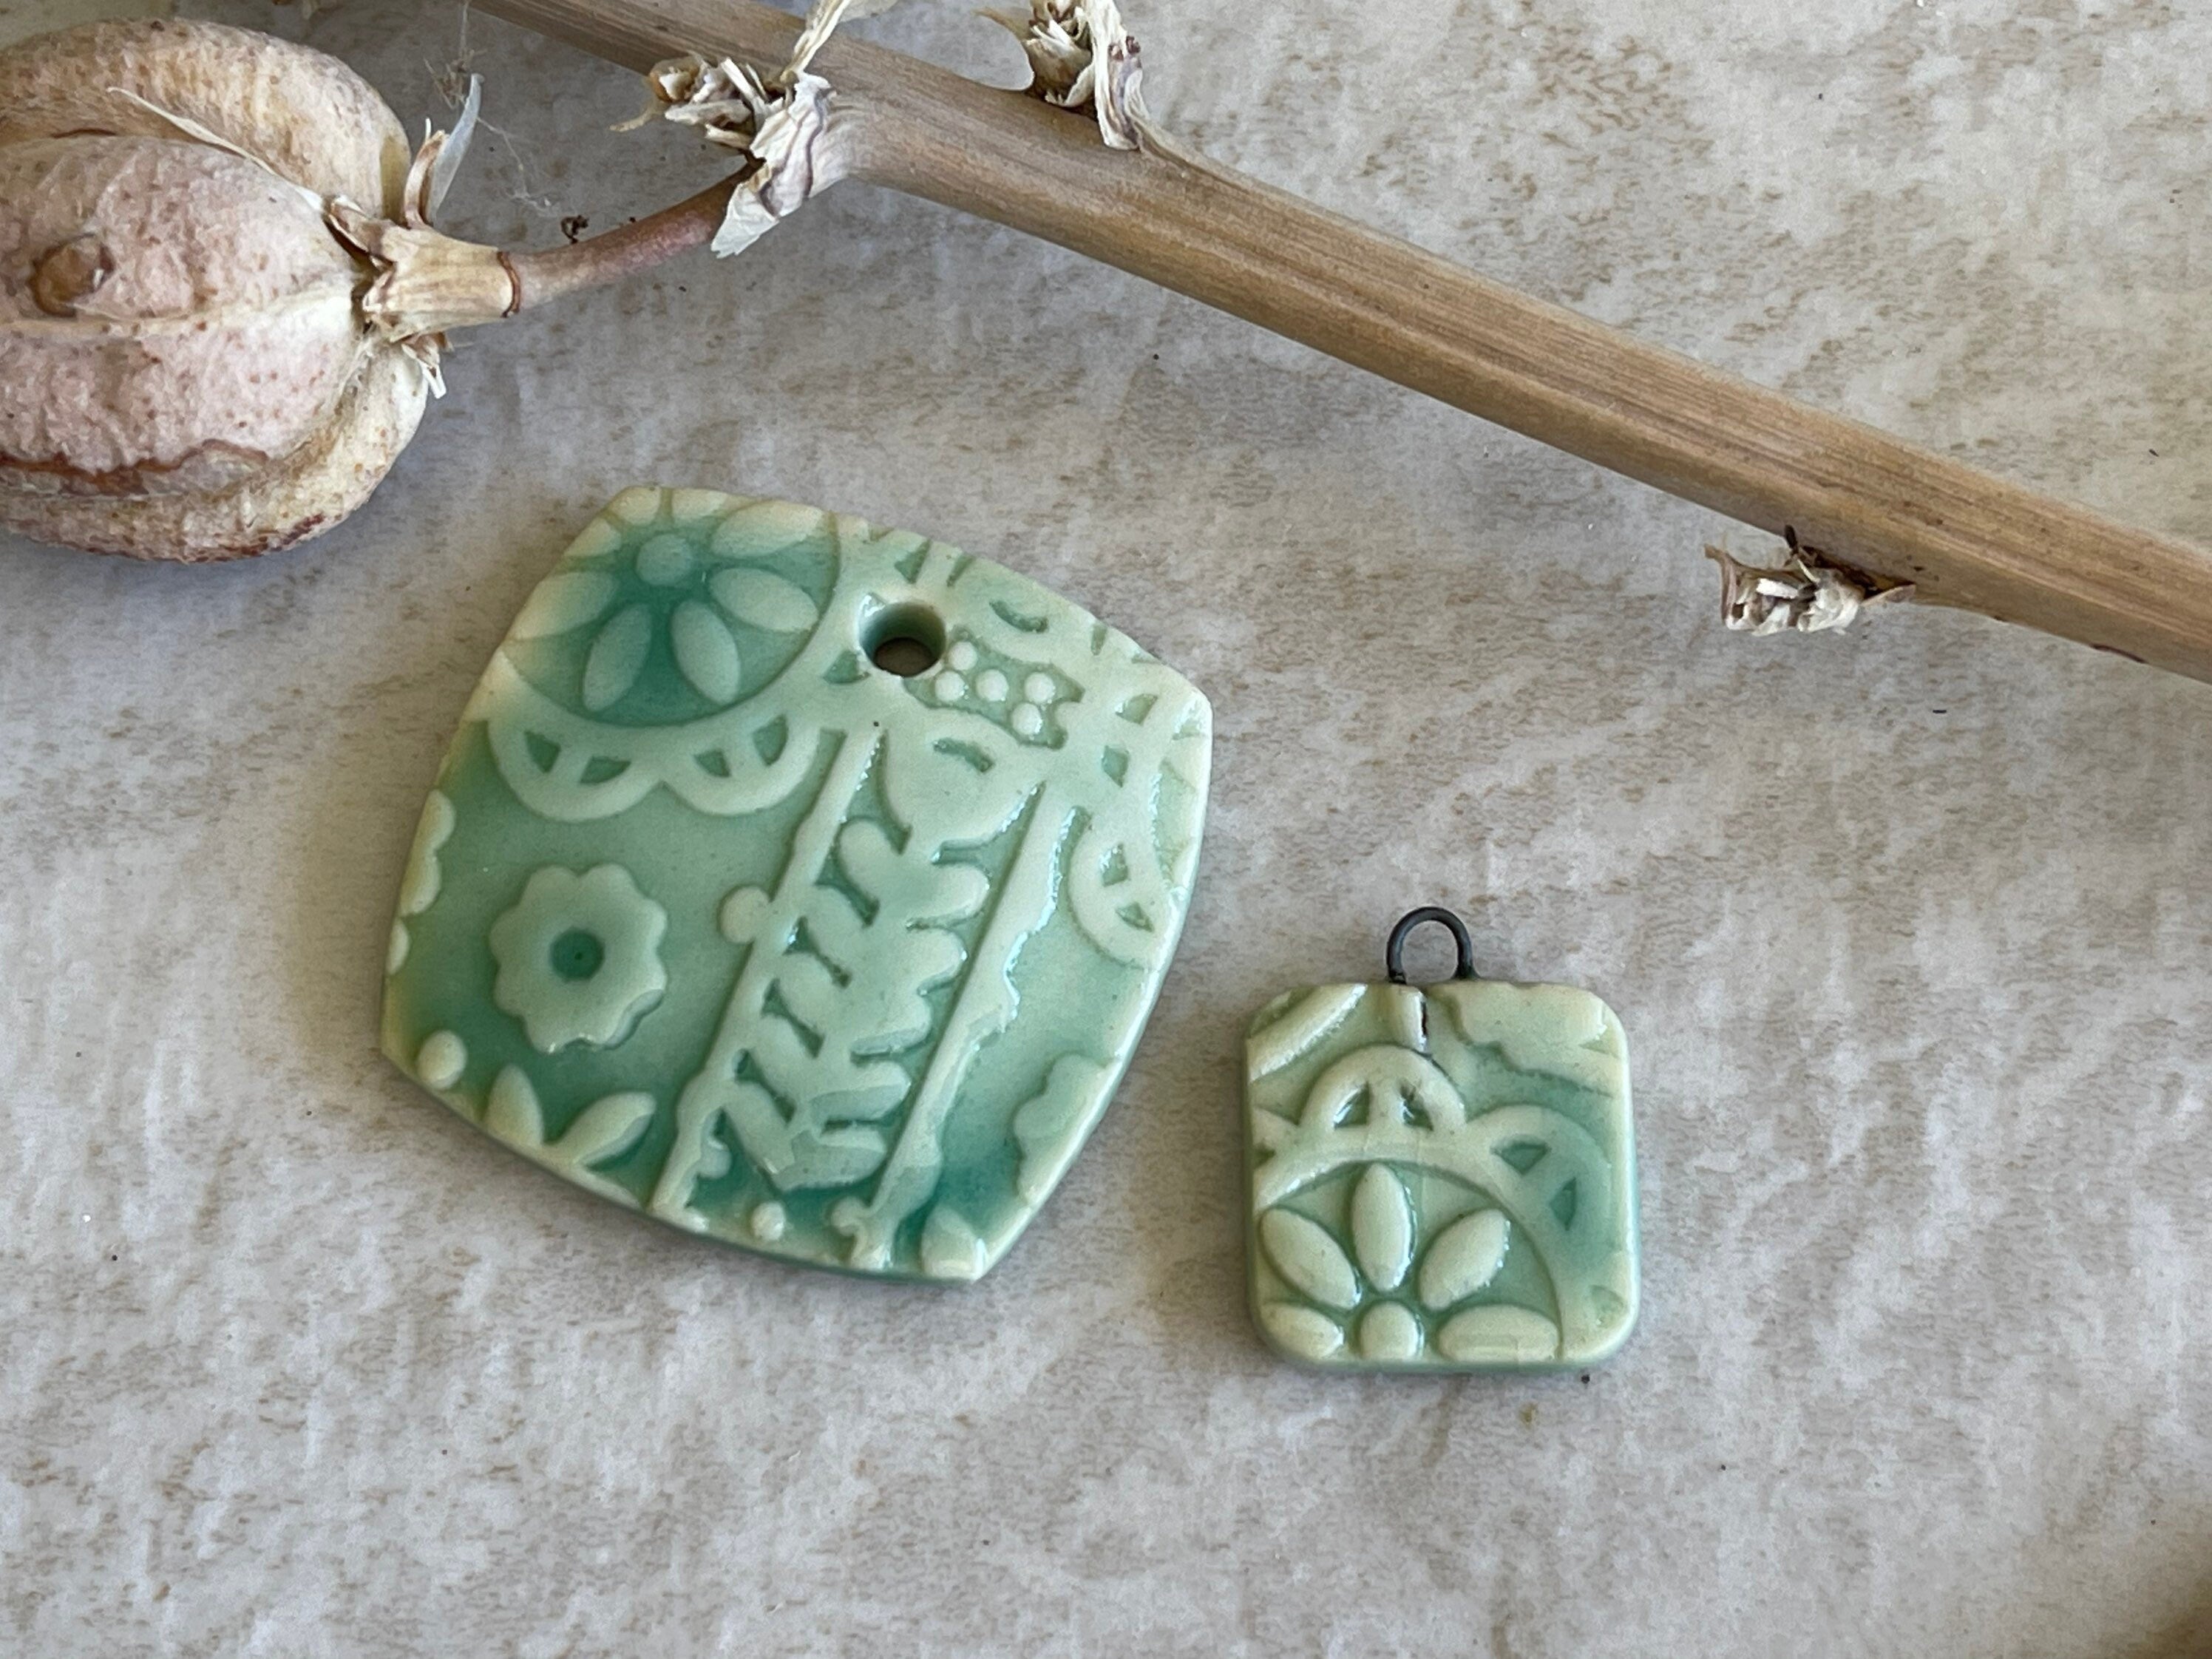 Abstract Pendant, Turquoise Pendant, Folk Art, Porcelain Ceramic Pendant, Jewelry Making Components